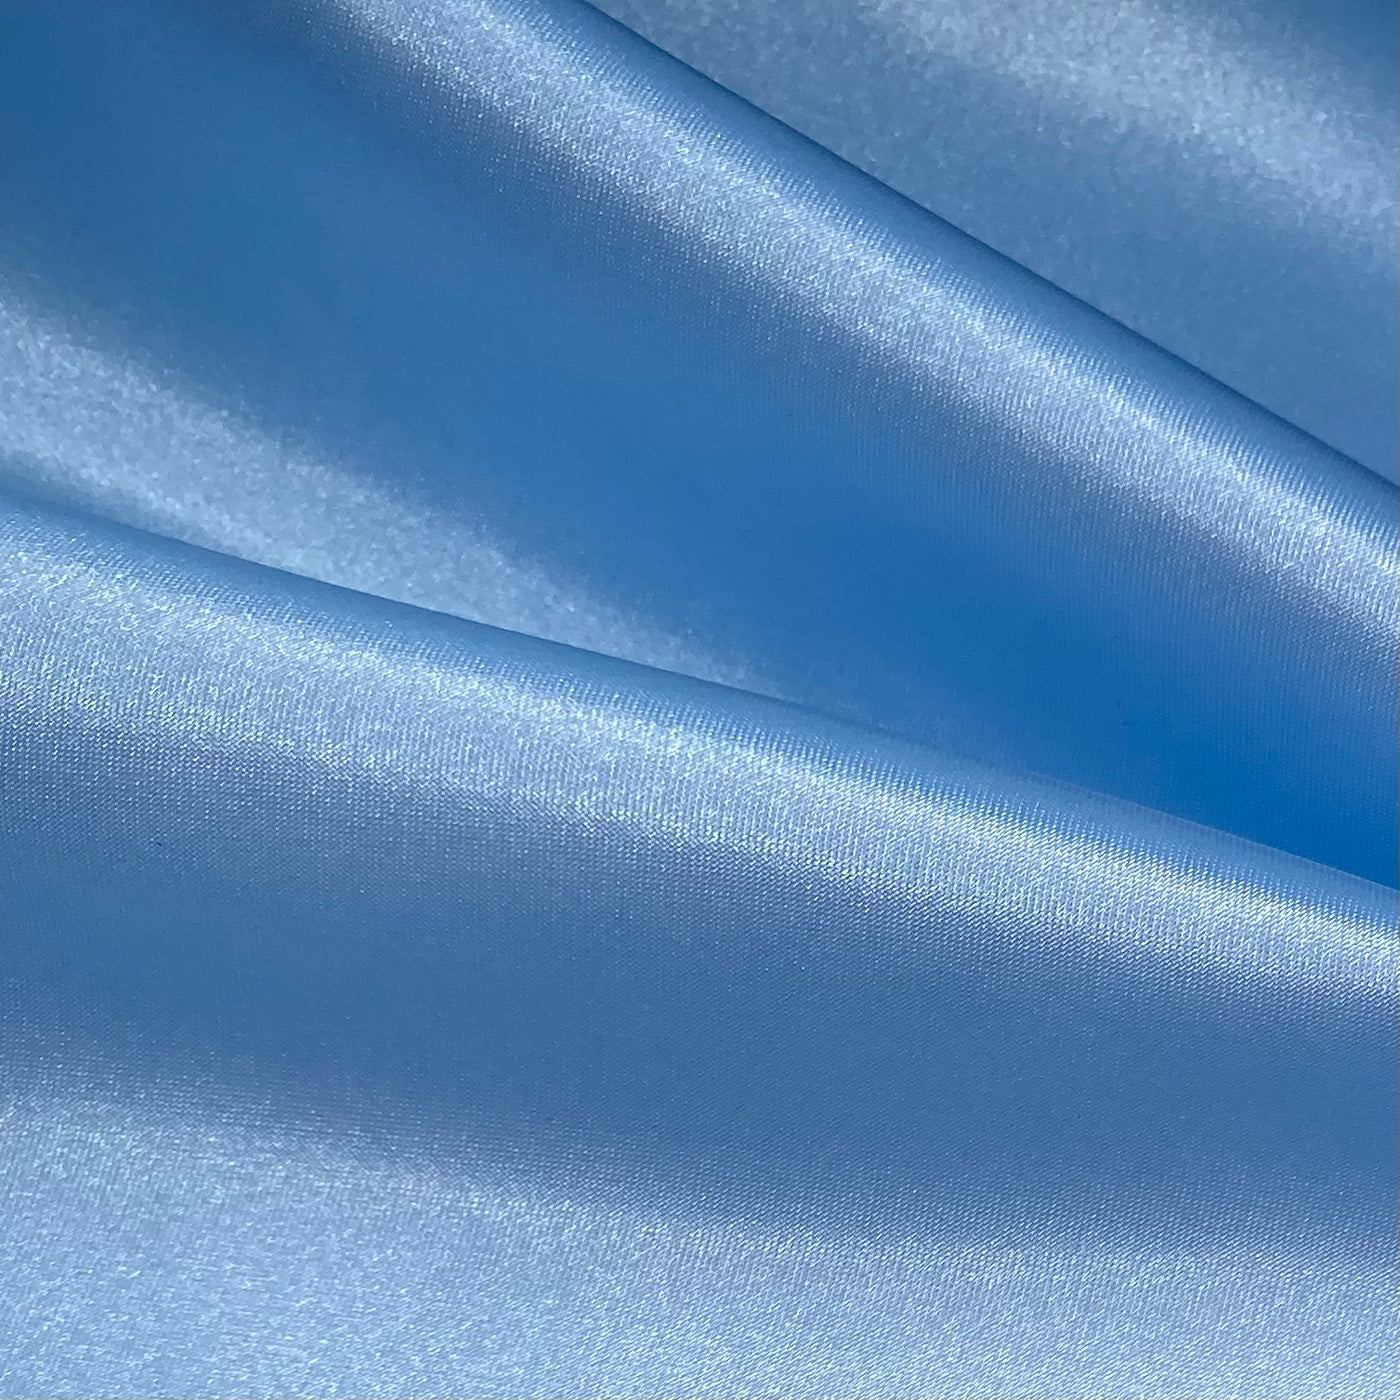 Polyester Satin - 44” - Powder Blue